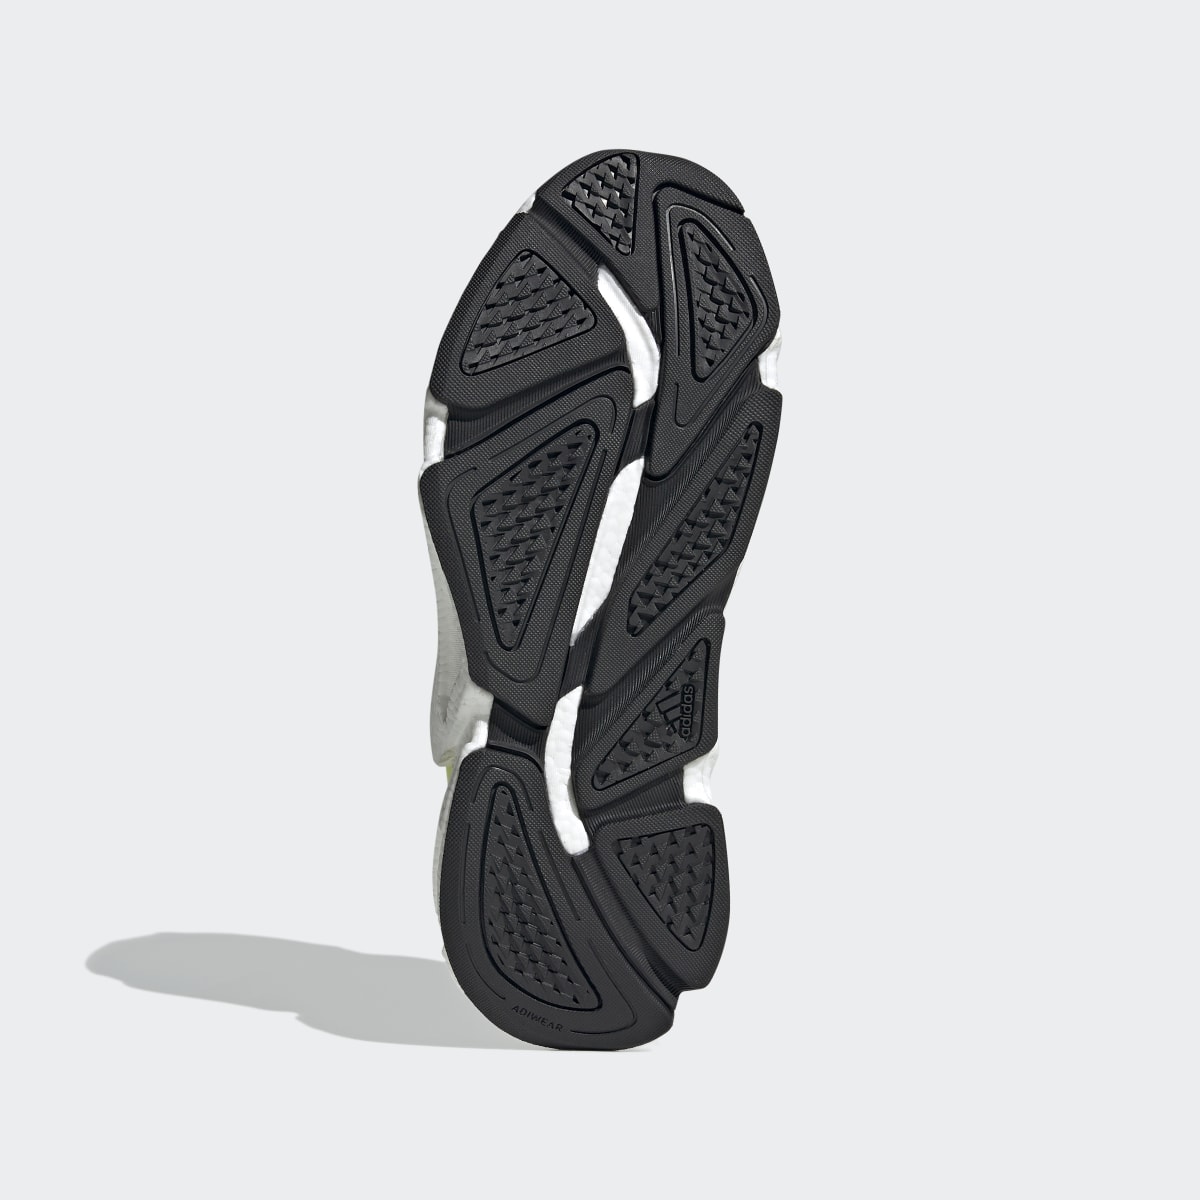 Adidas Karlie Kloss X9000 Shoes. 4